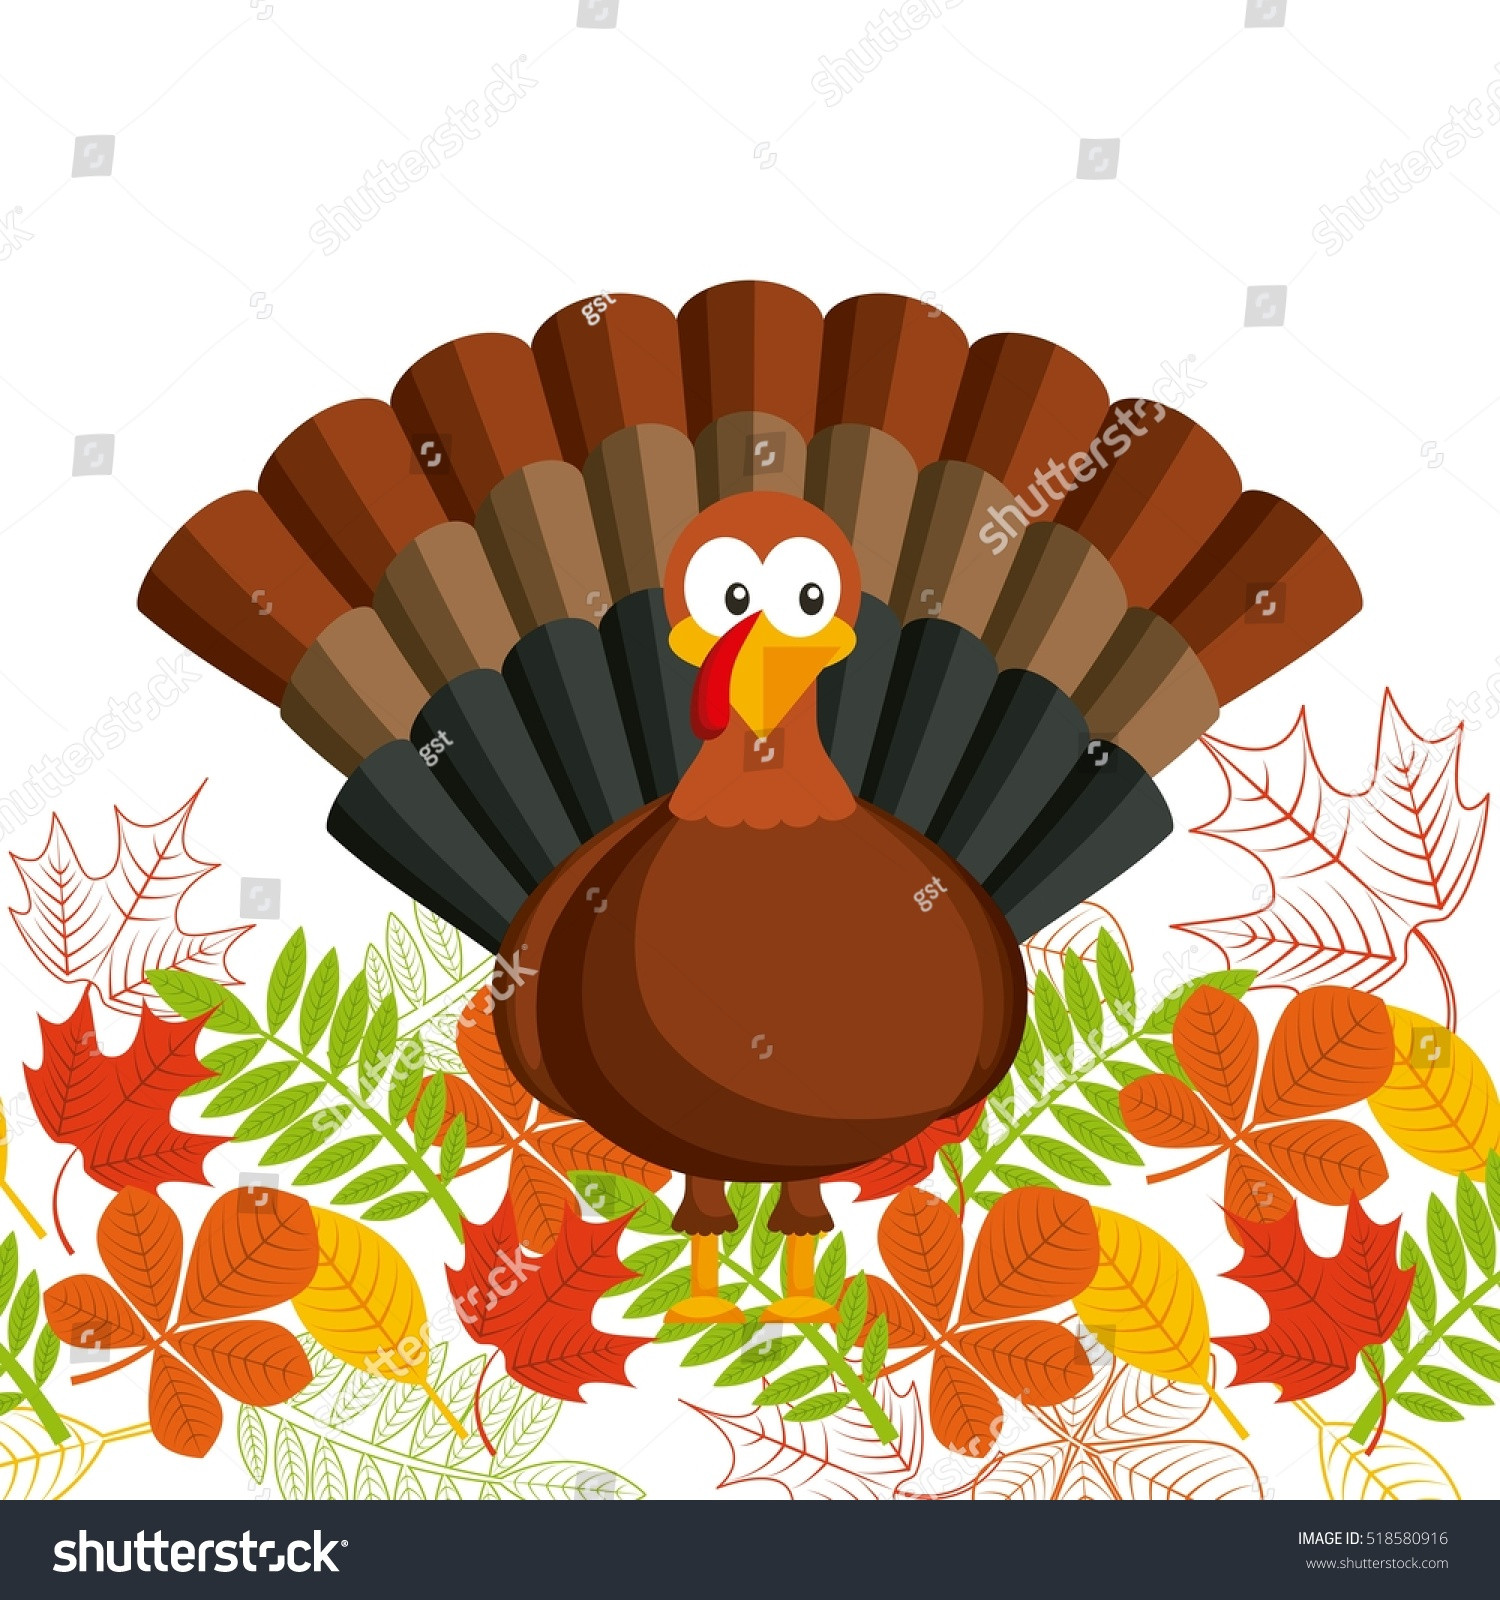 Turkey Icon For Thanksgiving
 Happy Thanksgiving Card Cartoon Turkey Icon Stock Vector